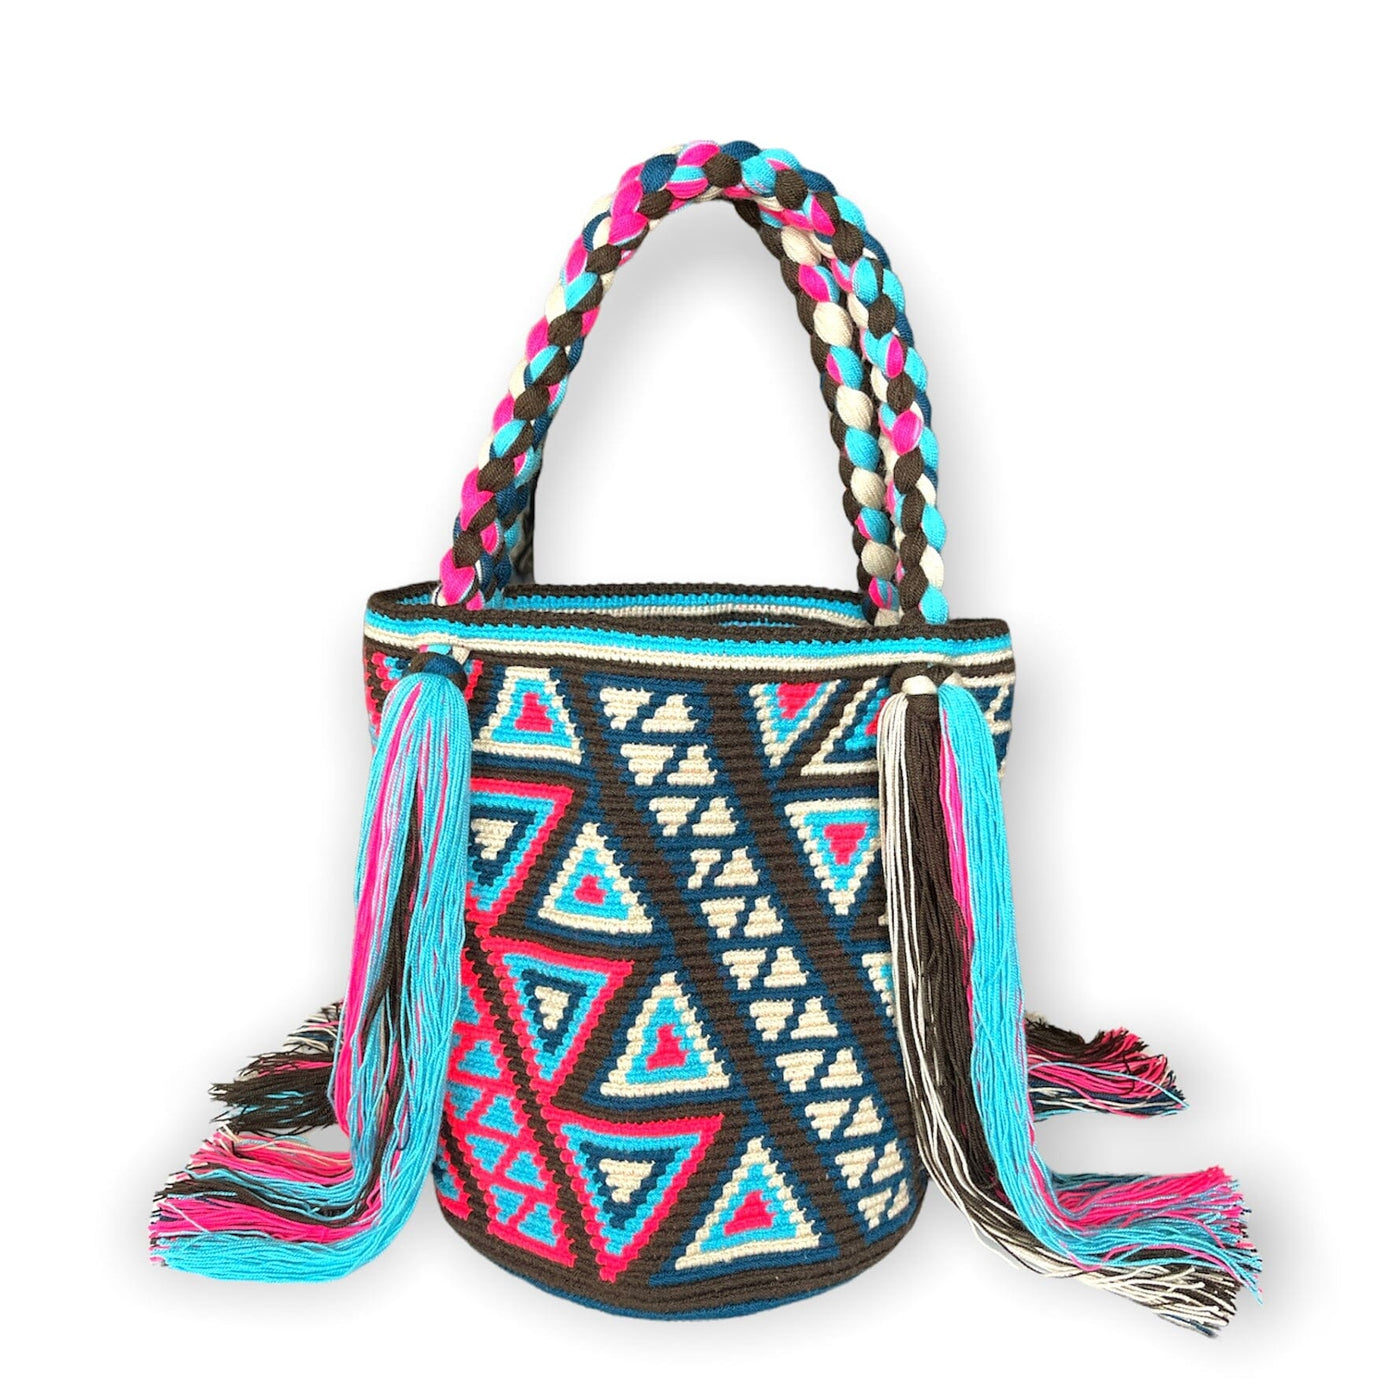 Colorful Tote Bag | Summer Shoulder Bag | Crochet Purse with Tassels